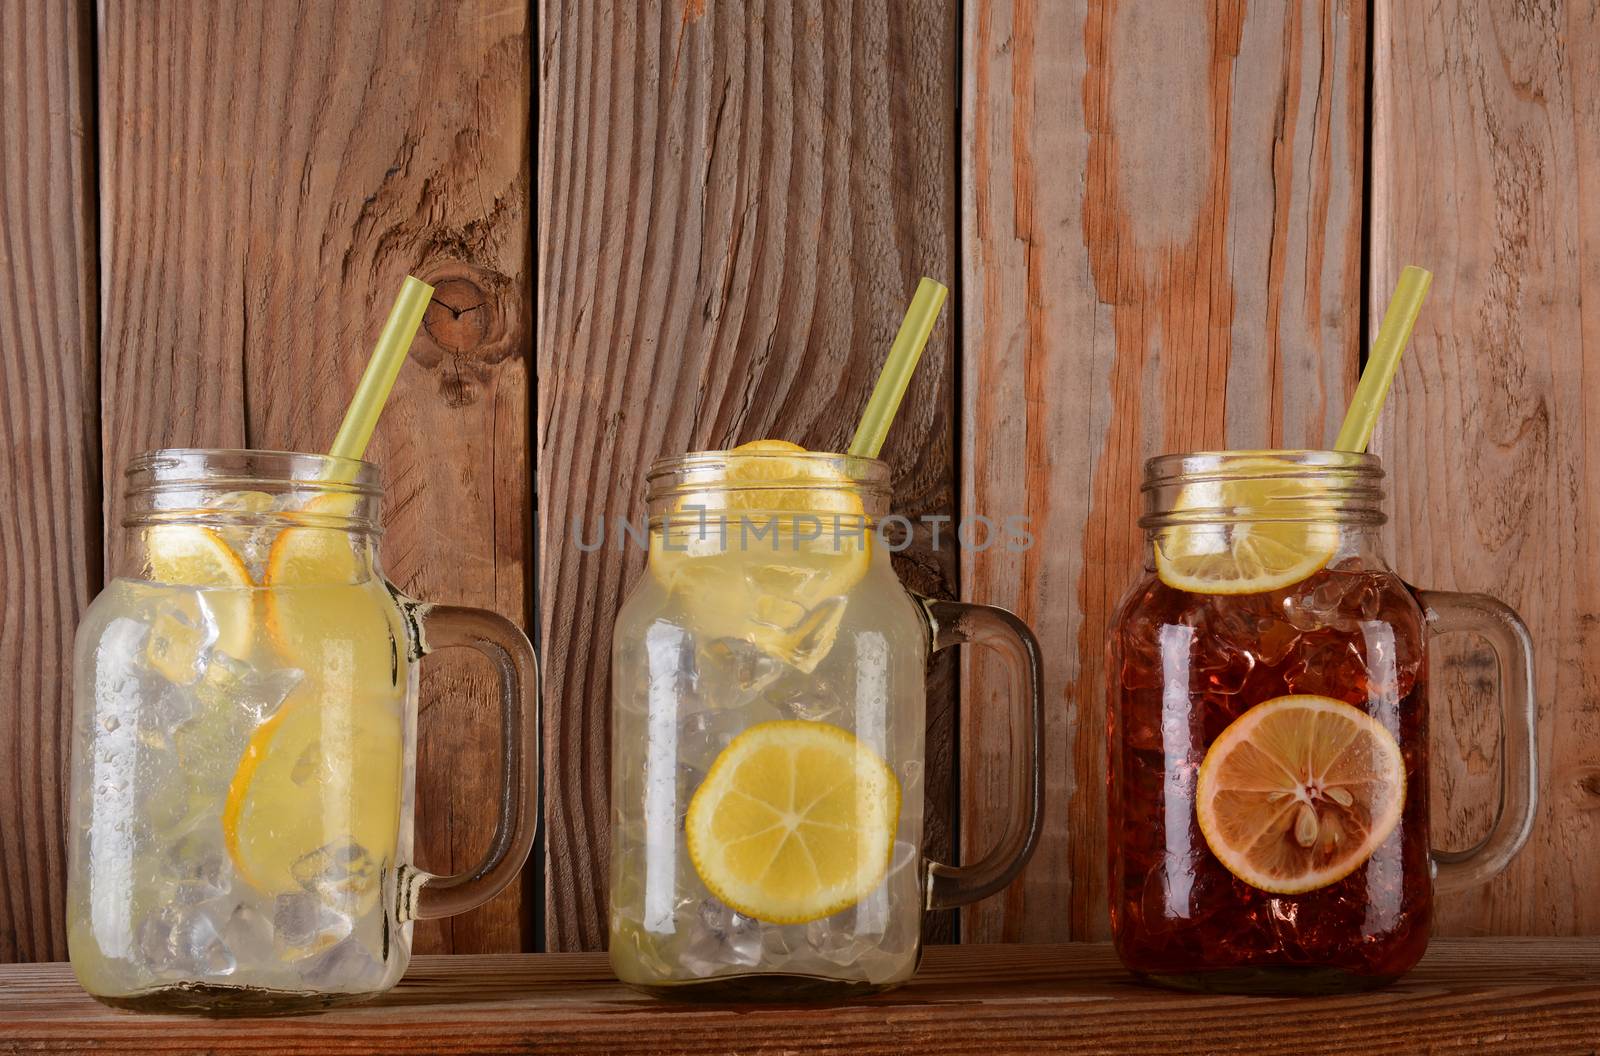 Lemonade and Fruit Juice Glasses on Shelf by sCukrov